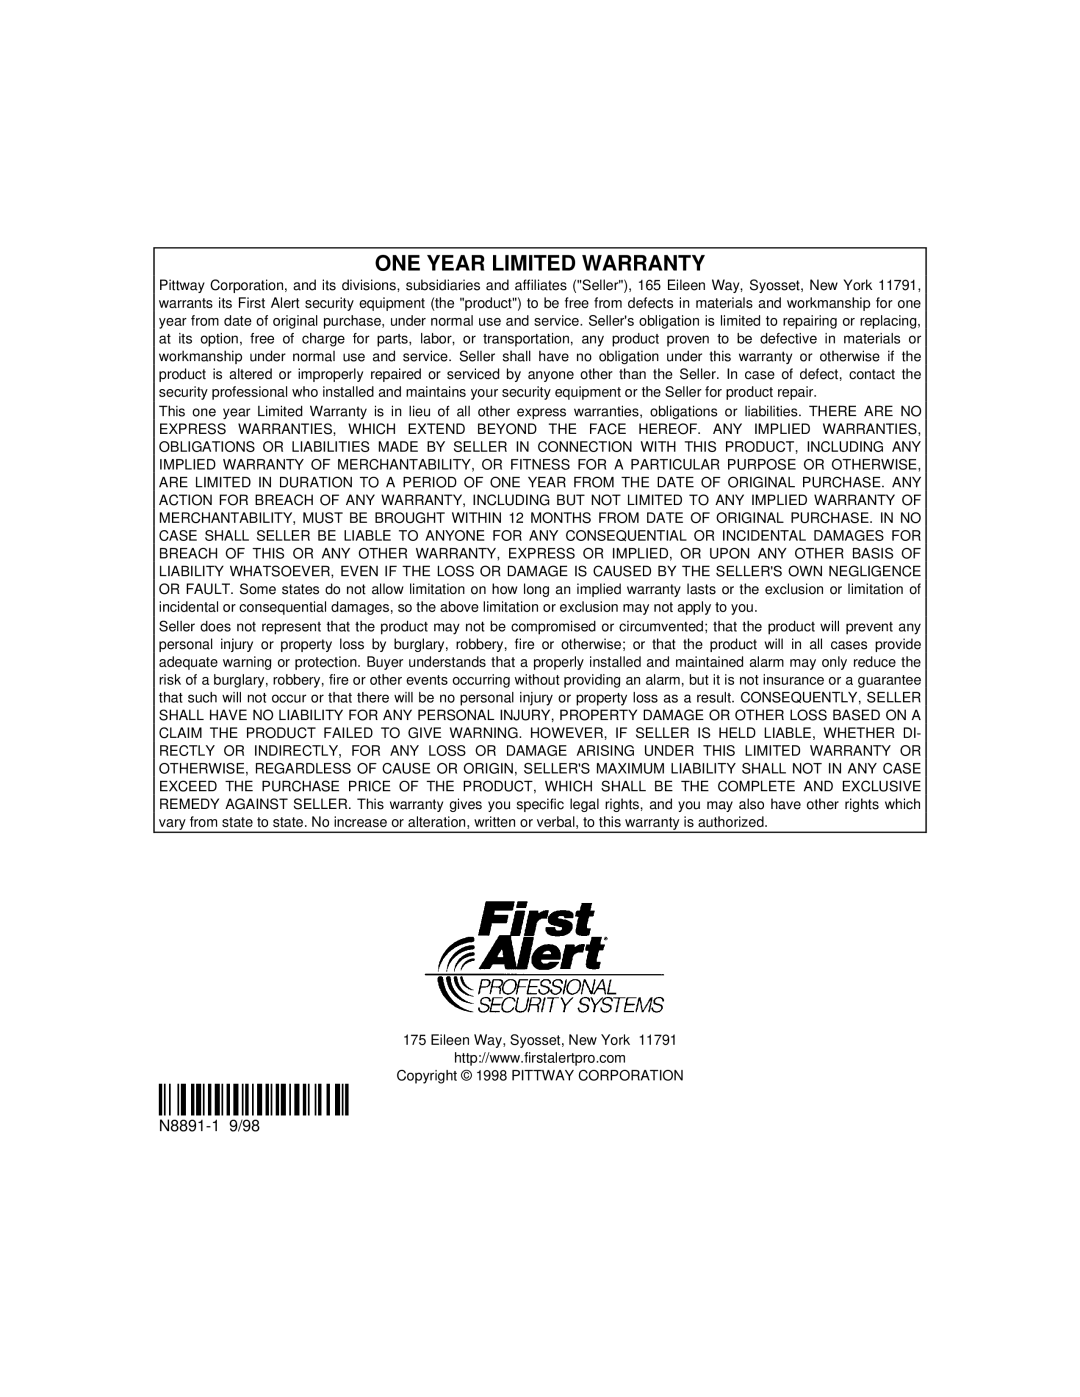 First Alert N8891-1 manual One Year Limited Warranty, ¬1%l 